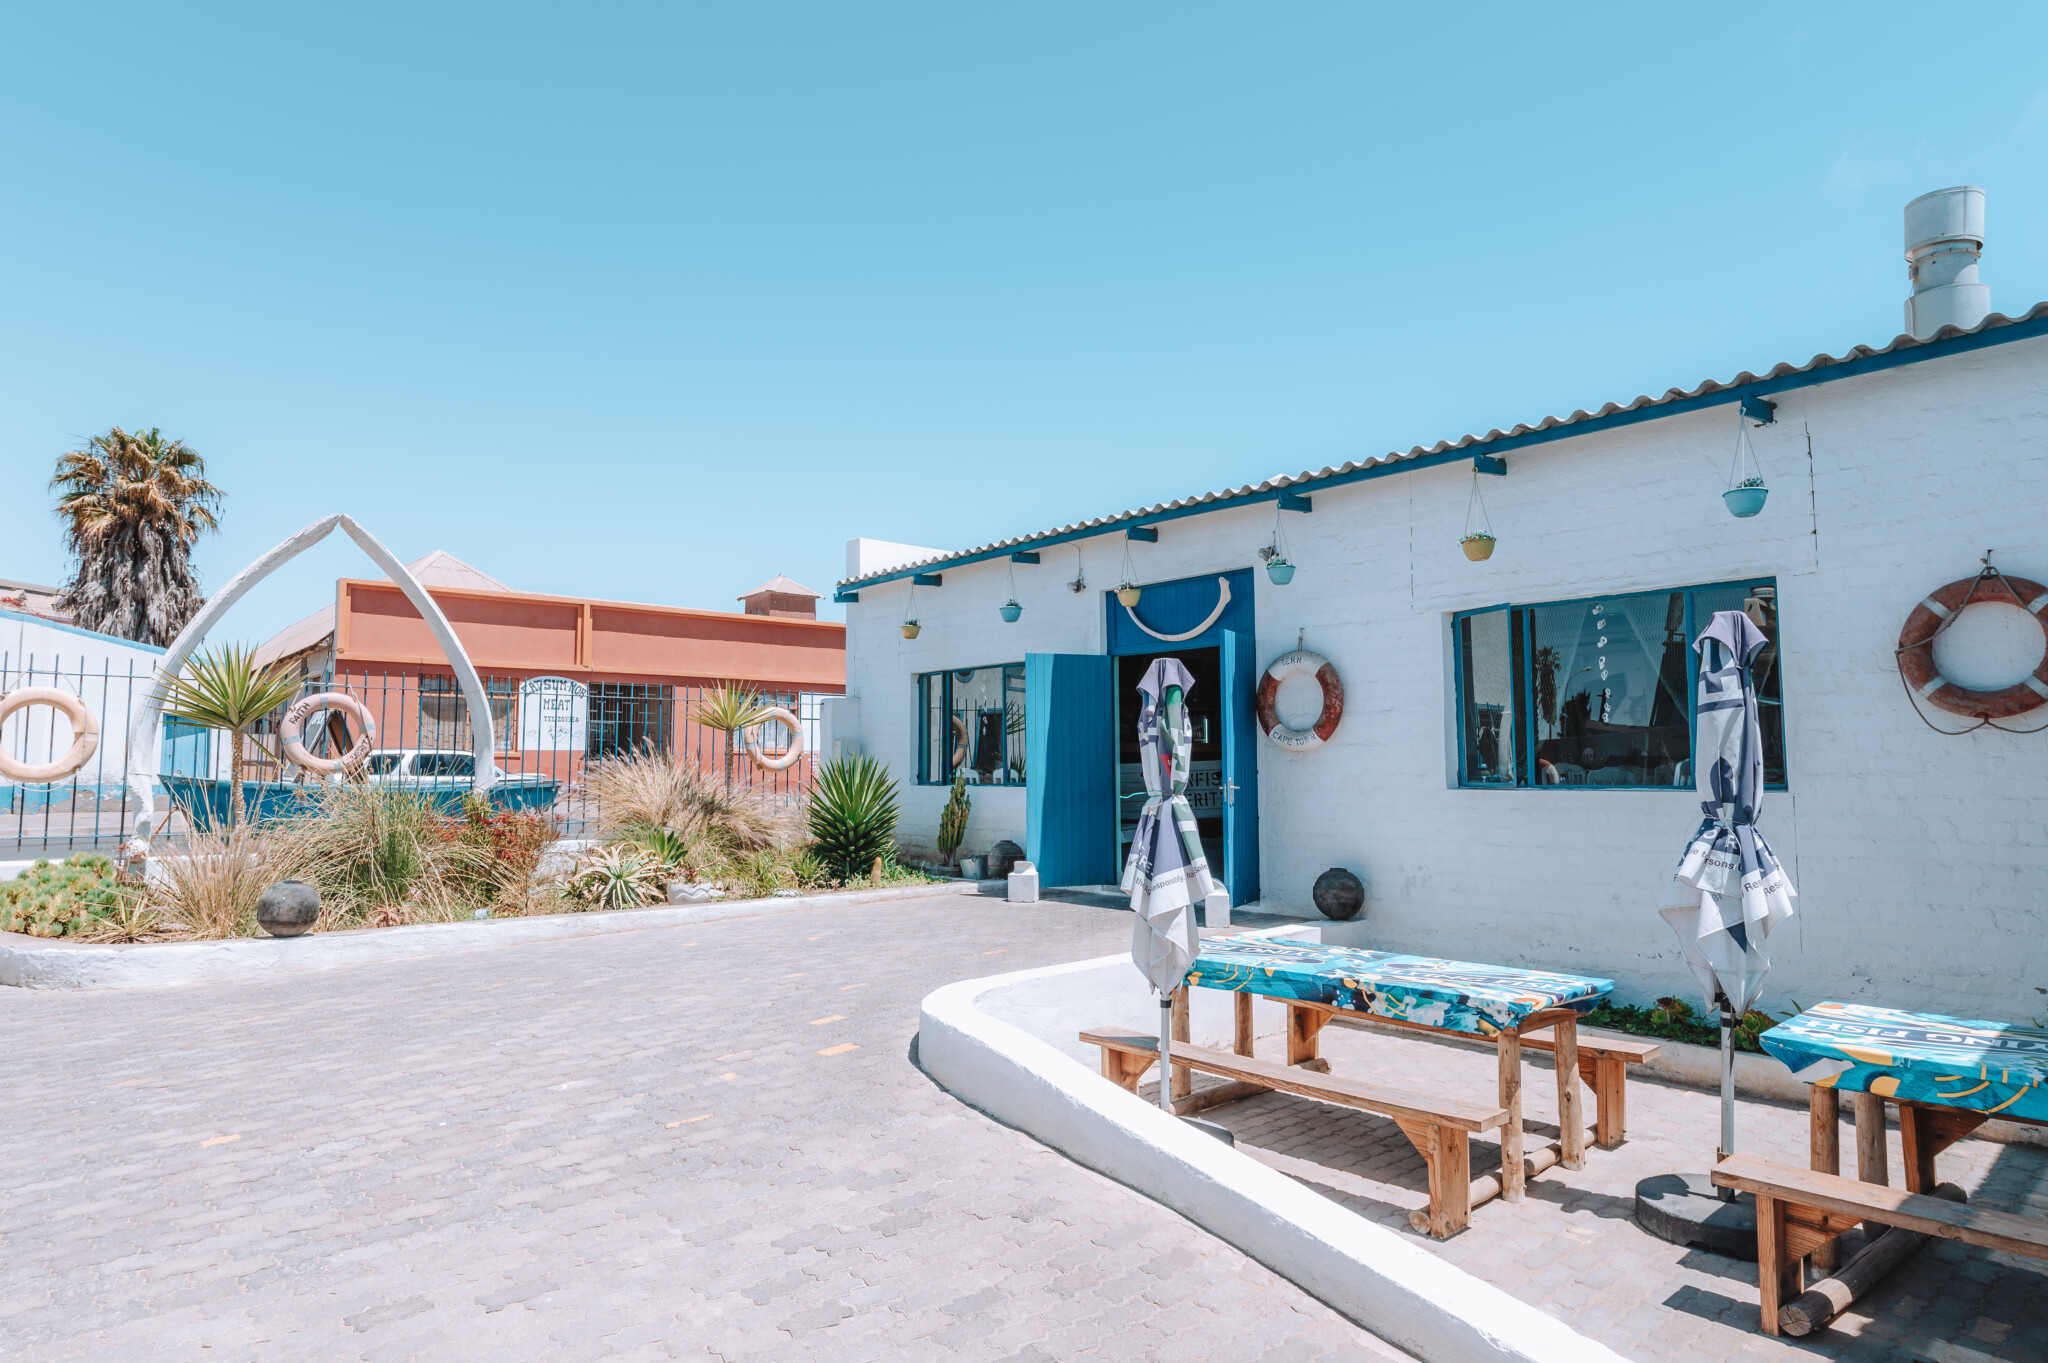 Portuguese Fisherman Restaurant in Lüderitz